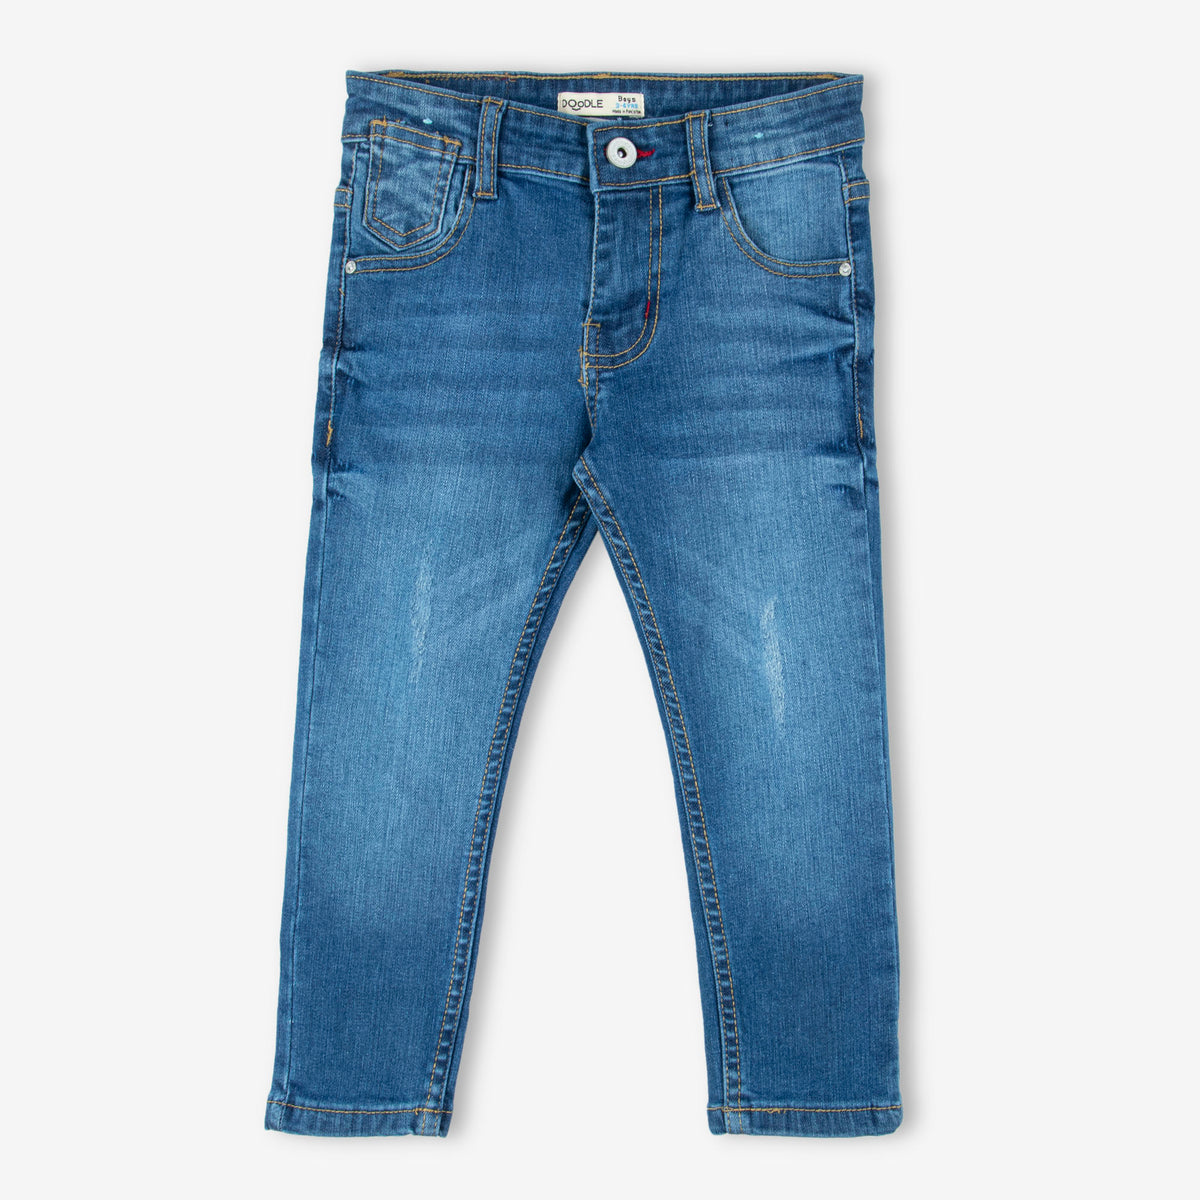 Blue's Clues Jeans – Welovedoodle.com